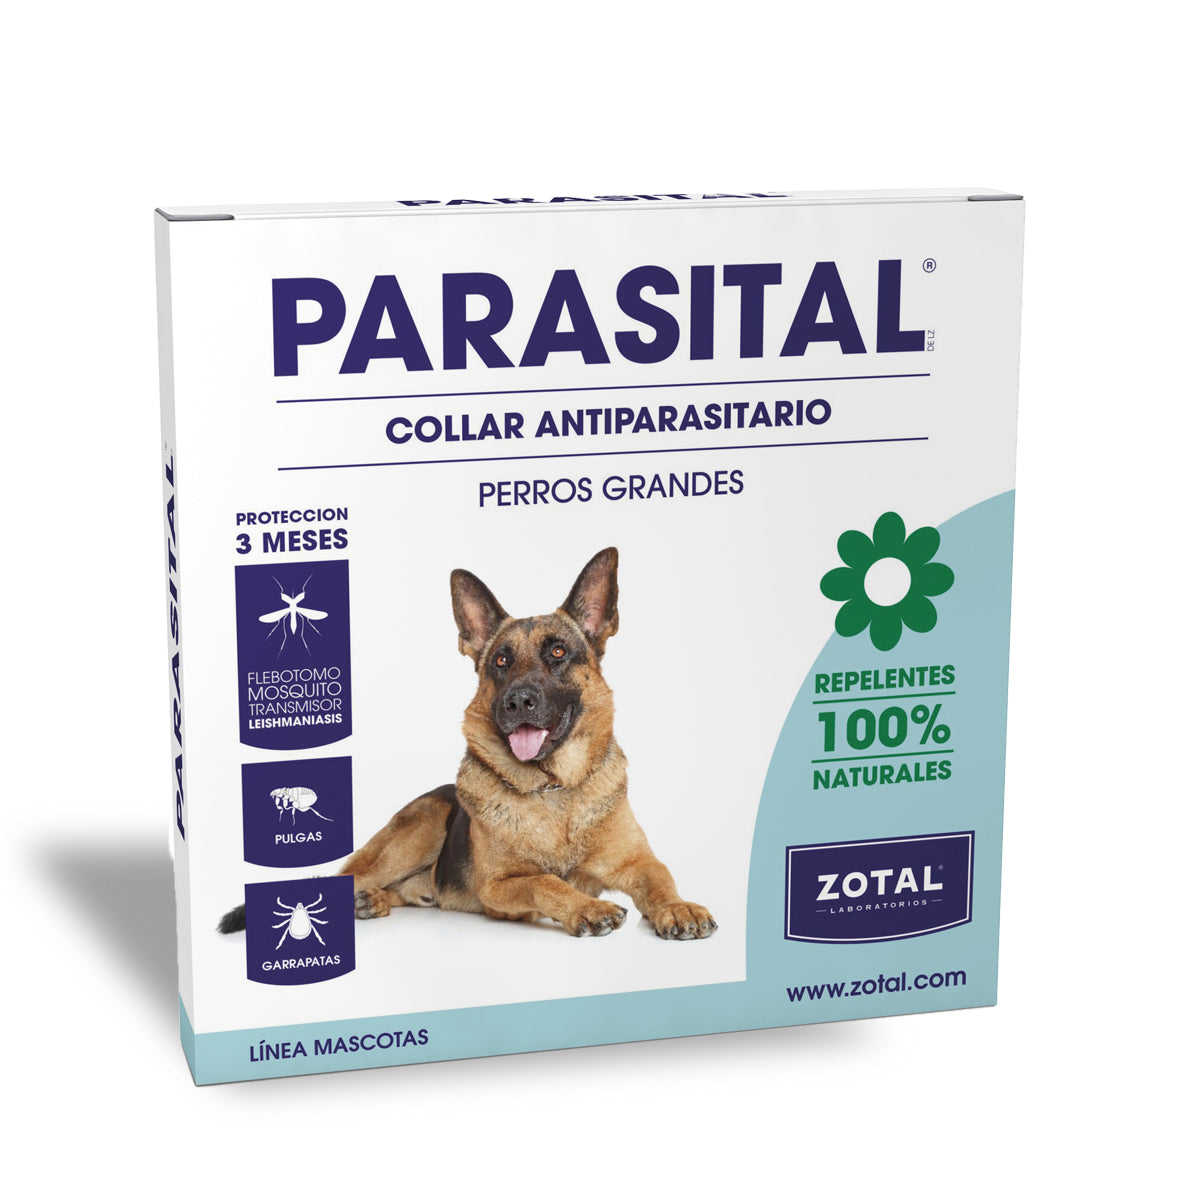 PARASITAL Collar Antiparasitario Repelente para Perros